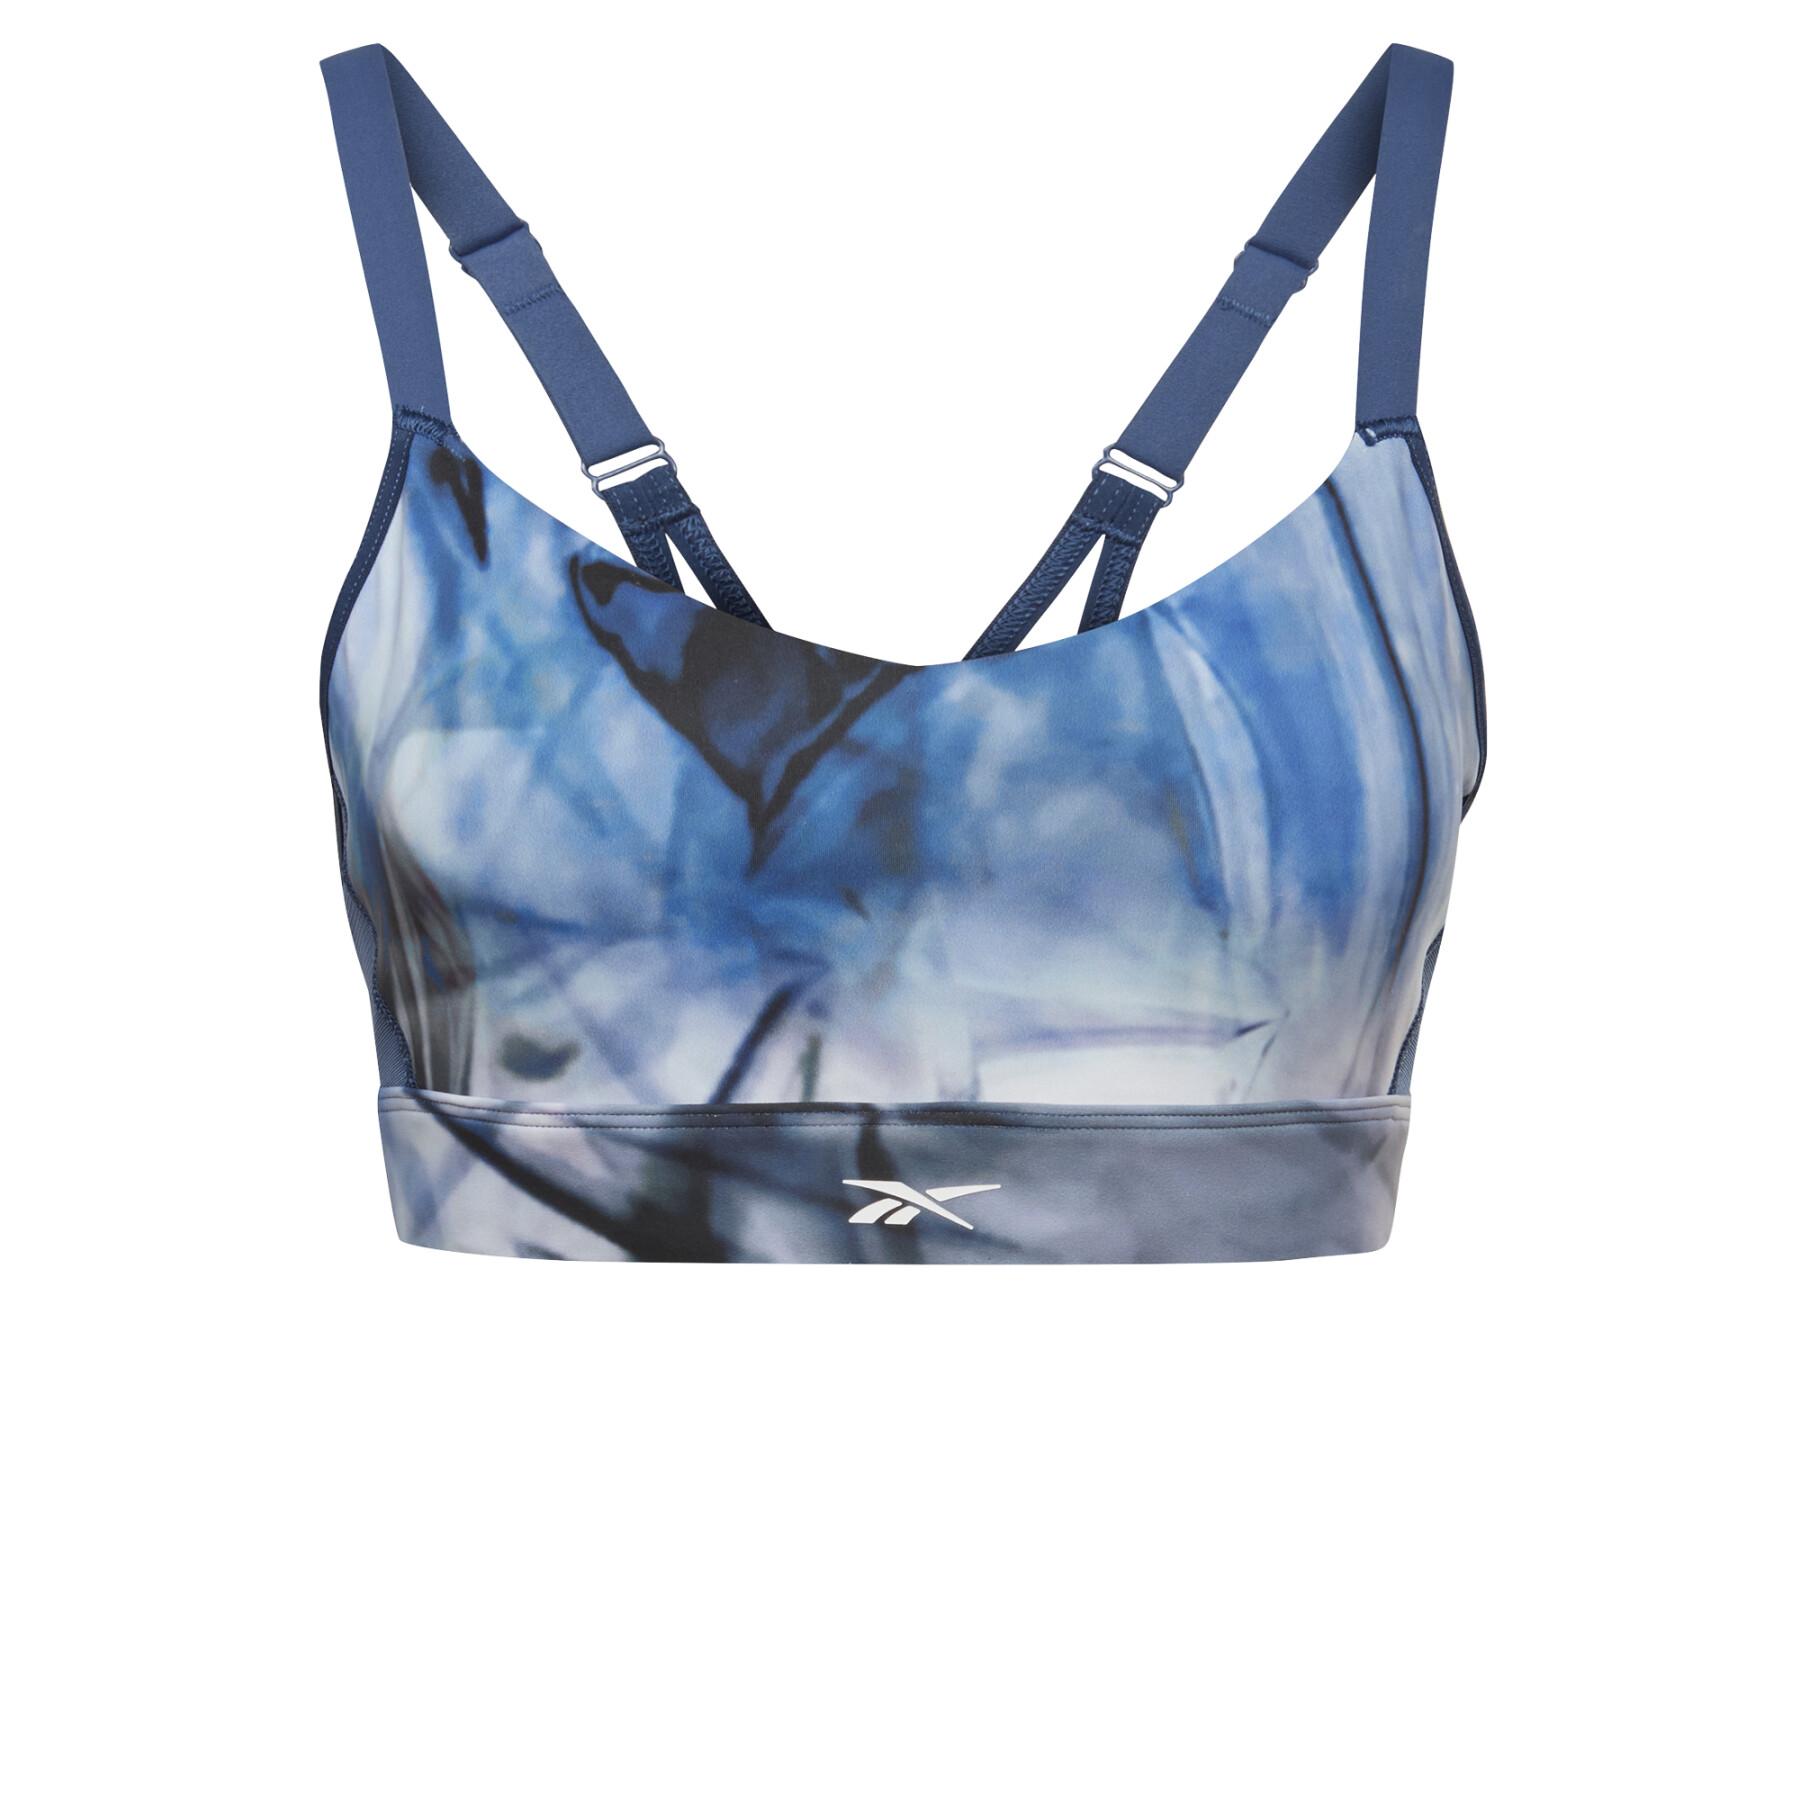 Women's bra Reebok Lux Strappy Sports Liquid Abyss Print